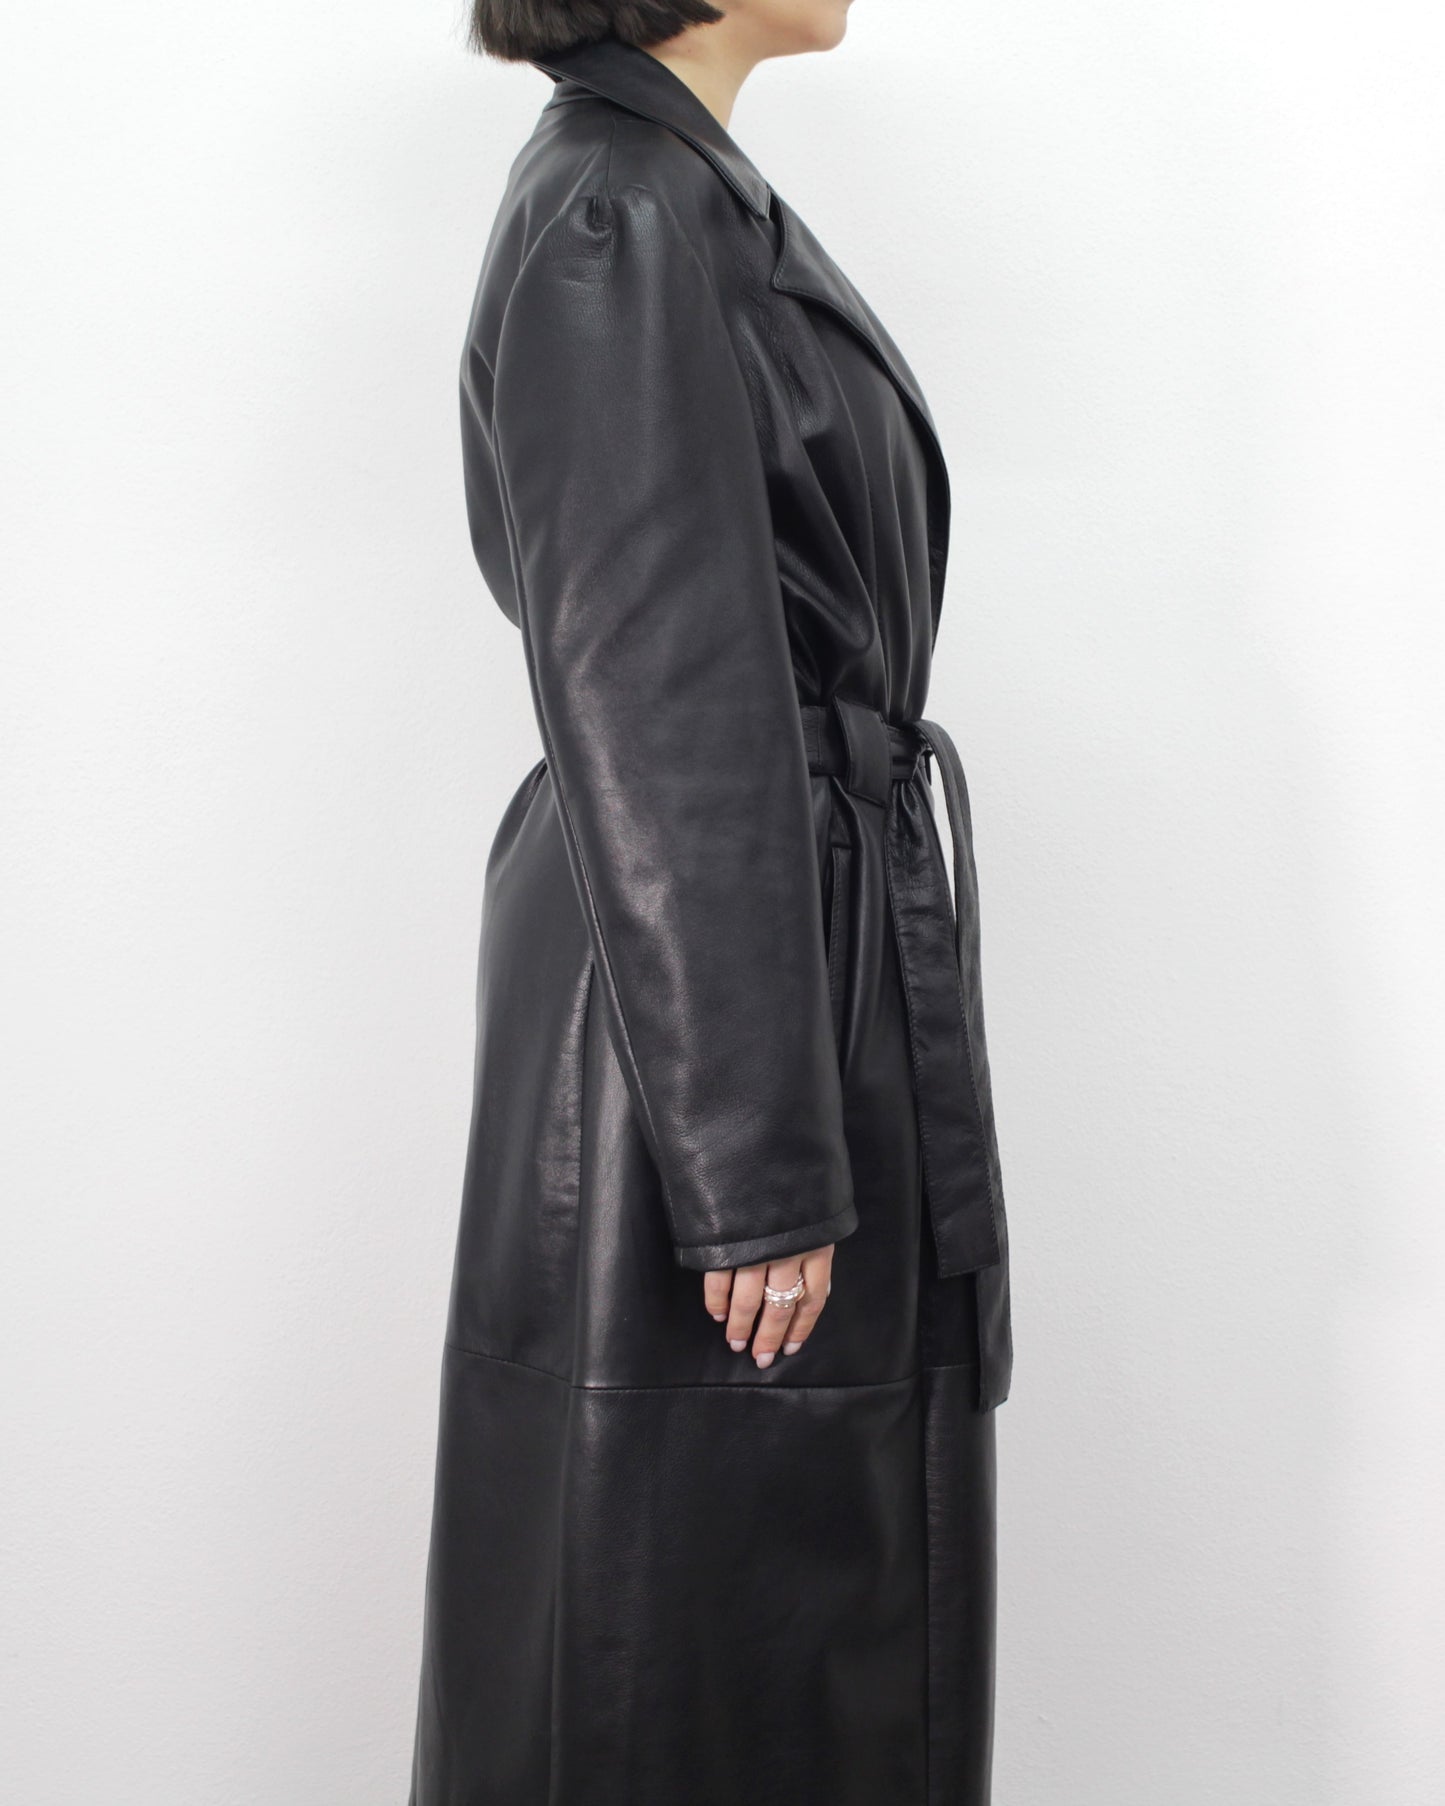 Trench-coat en cuir noir pour femme - Collection Artisan Made in Italy par Ferdinando Patermo